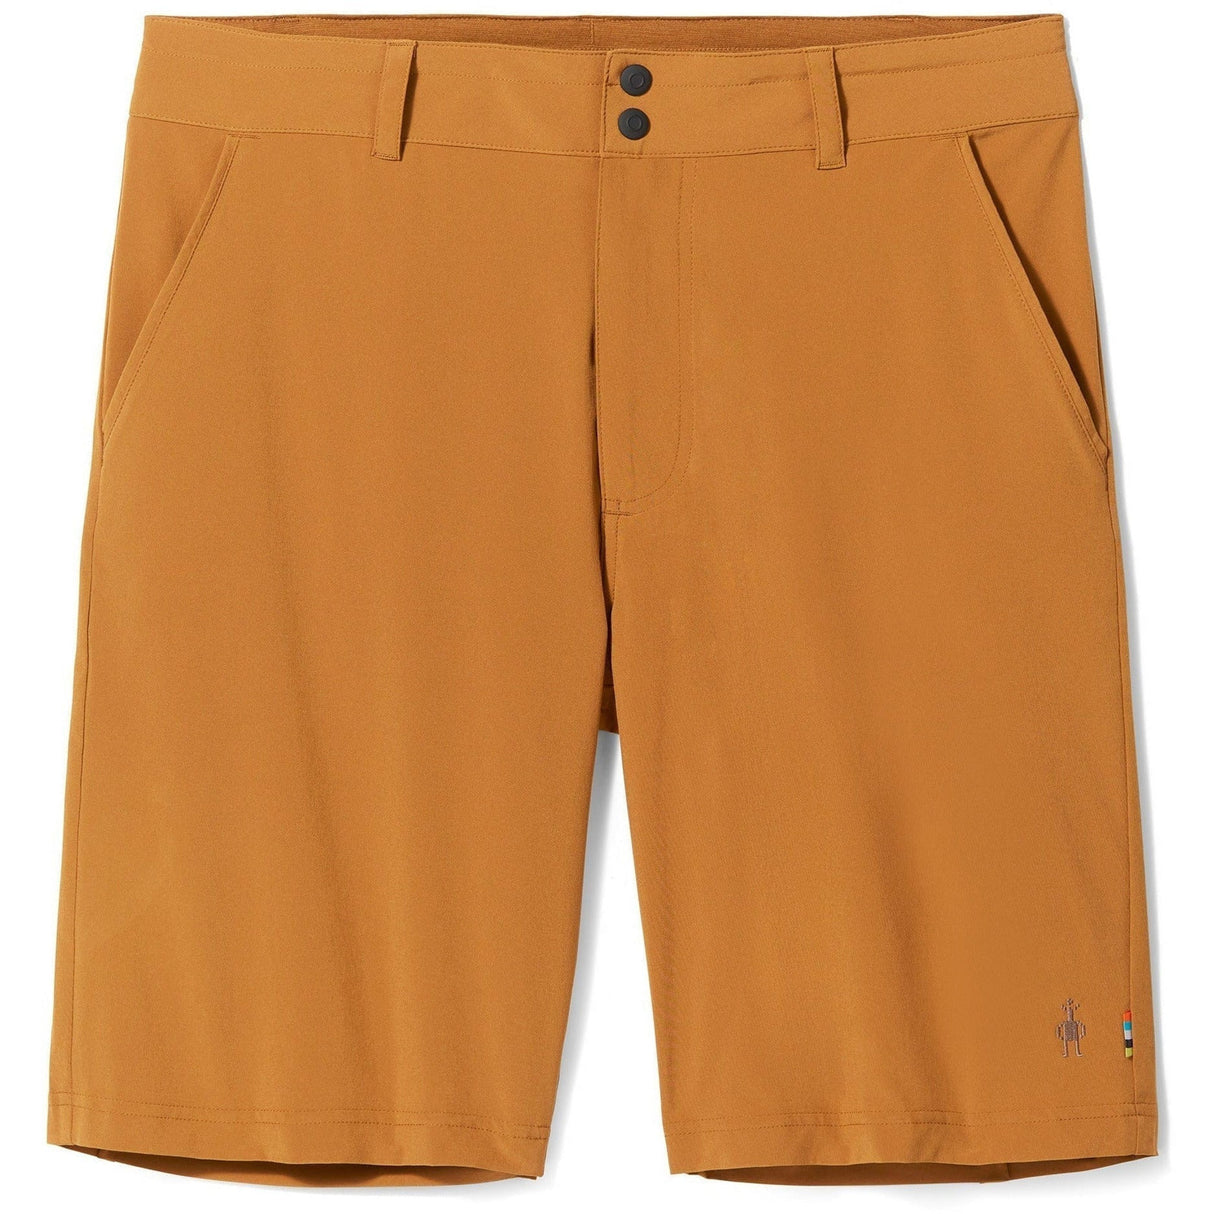 Smartwool Mens 10" Shorts  -  Medium / Fox Brown